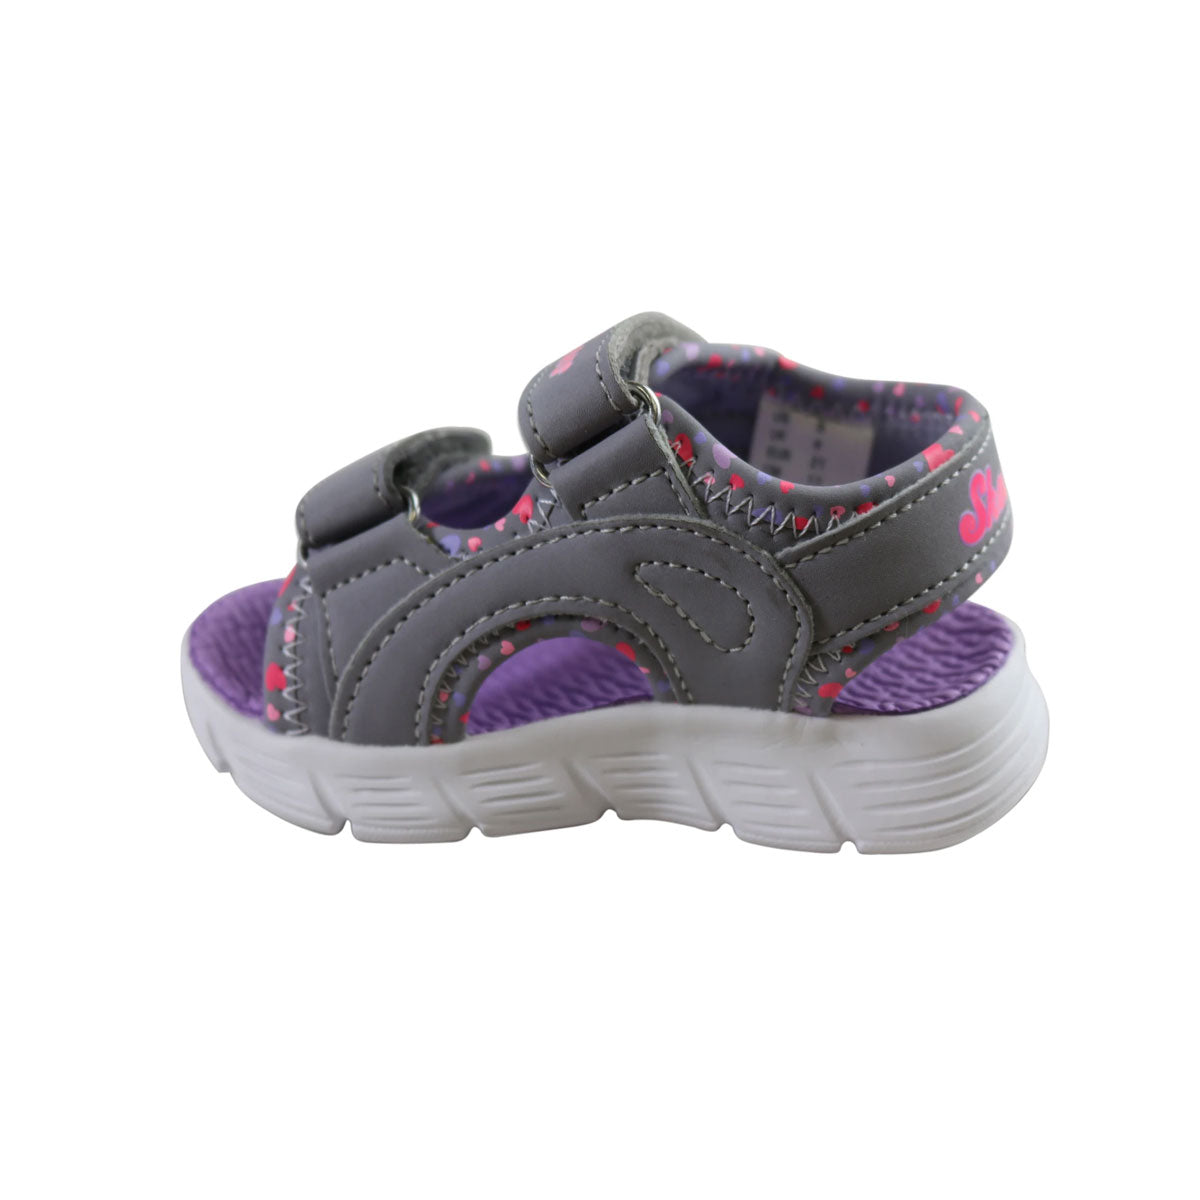 Skechers Infant Girls' C-Flex Sandals